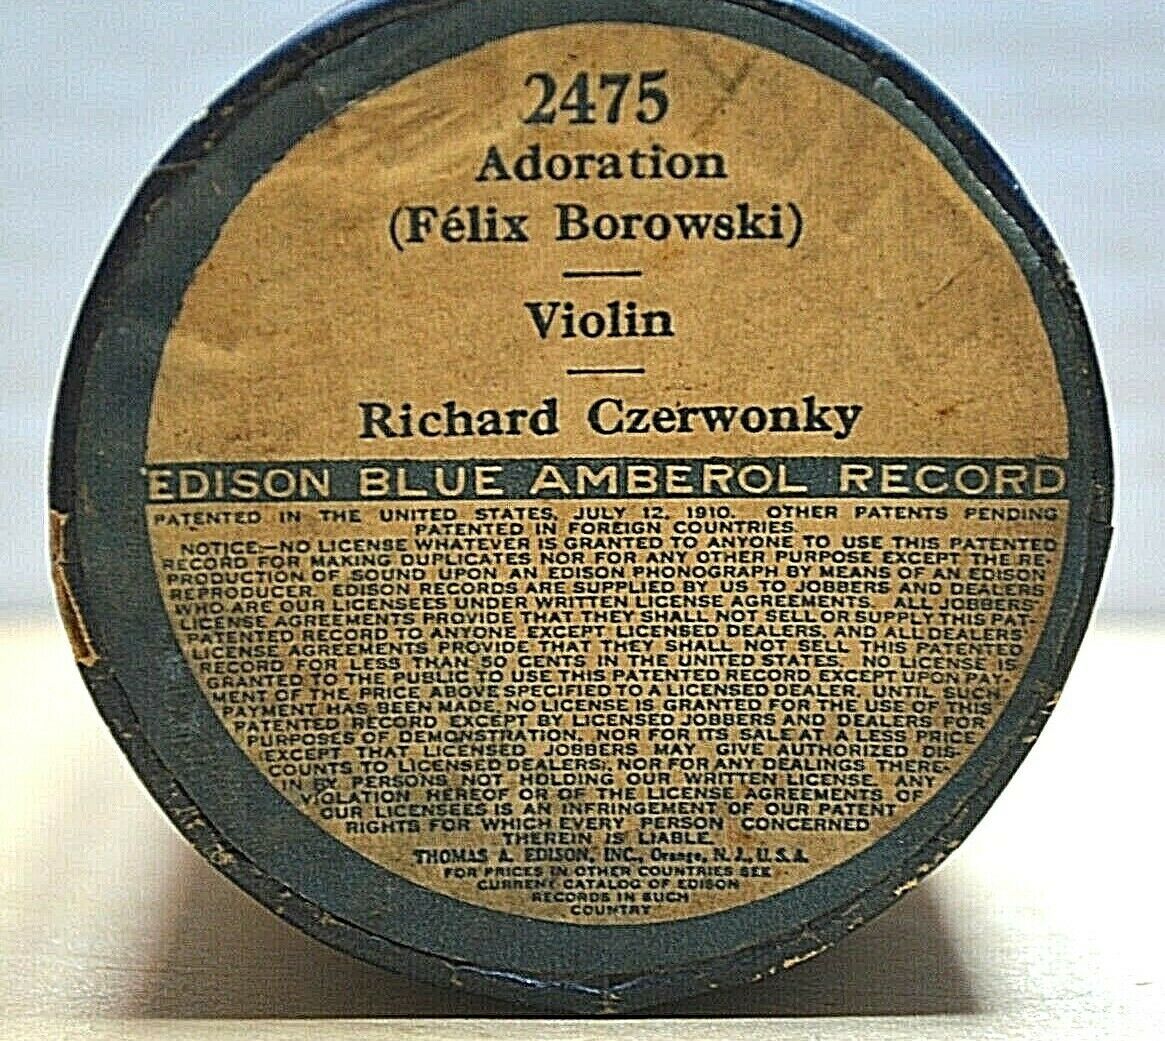 Edison Blue Amberol Record #2475   "adoration" (felix Borowski) Violin  4 Minute